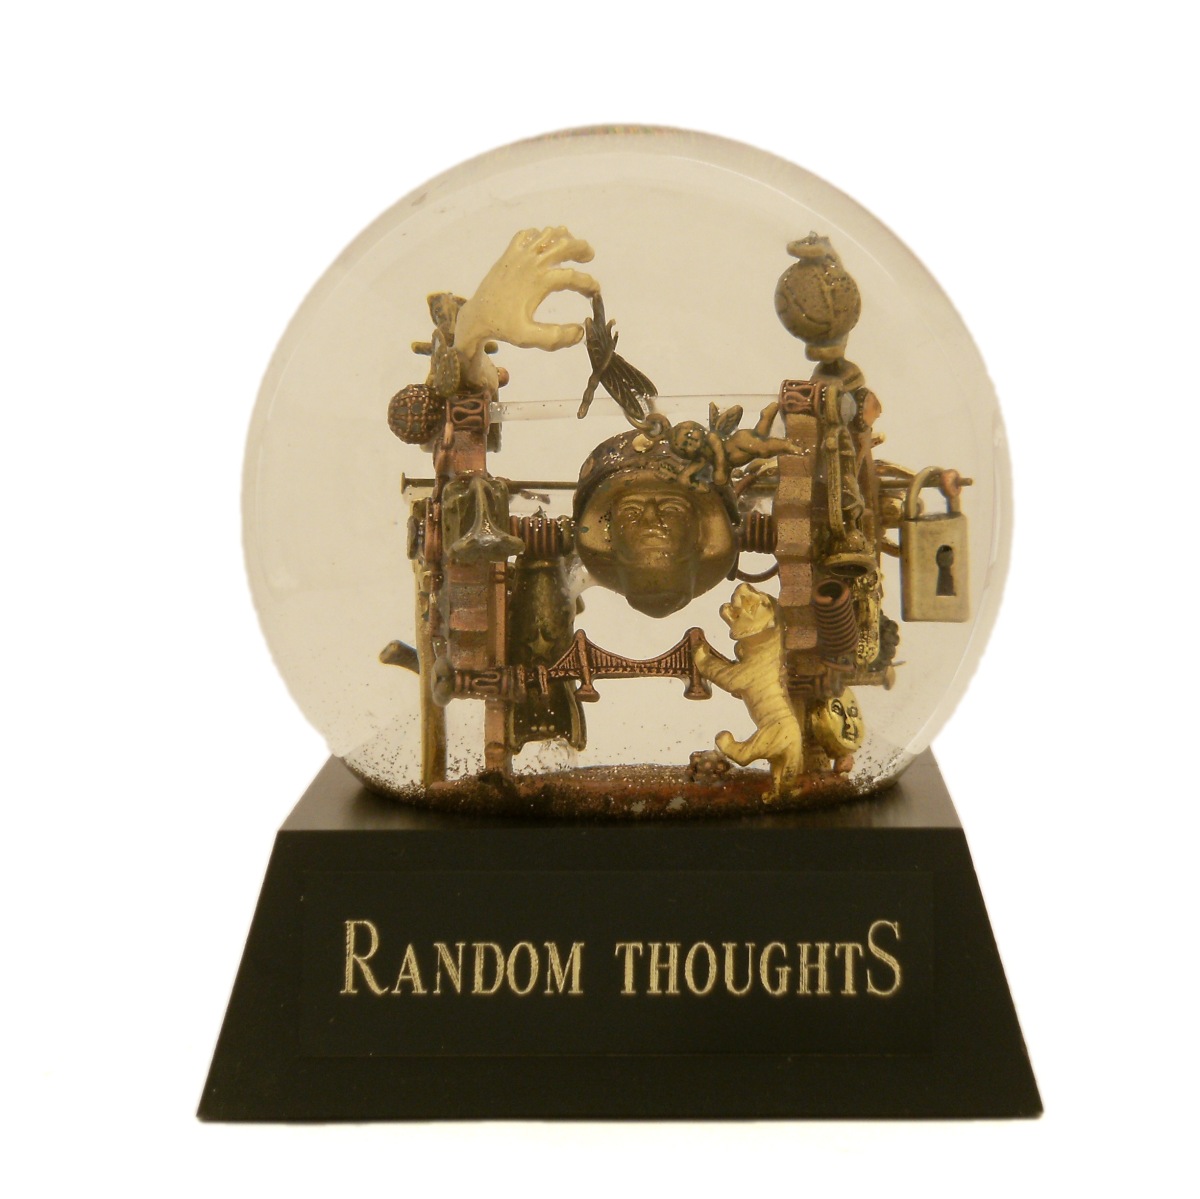 Random Thoughts Snowglobe, Camryn Forrest Designs 2014